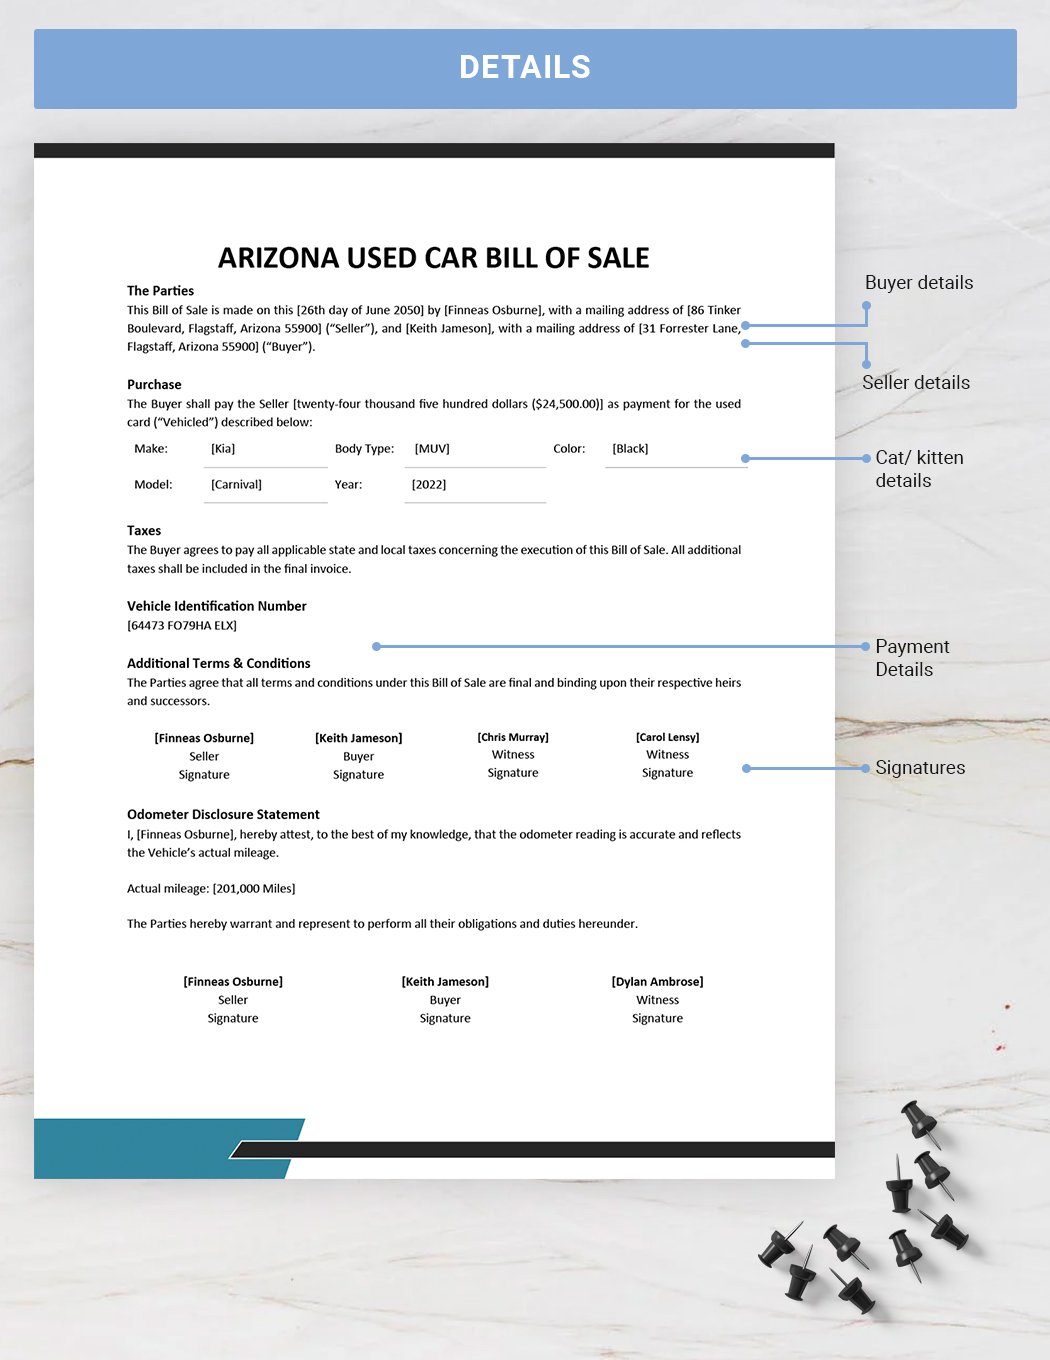 Arizona Used Car Bill of Sale Template